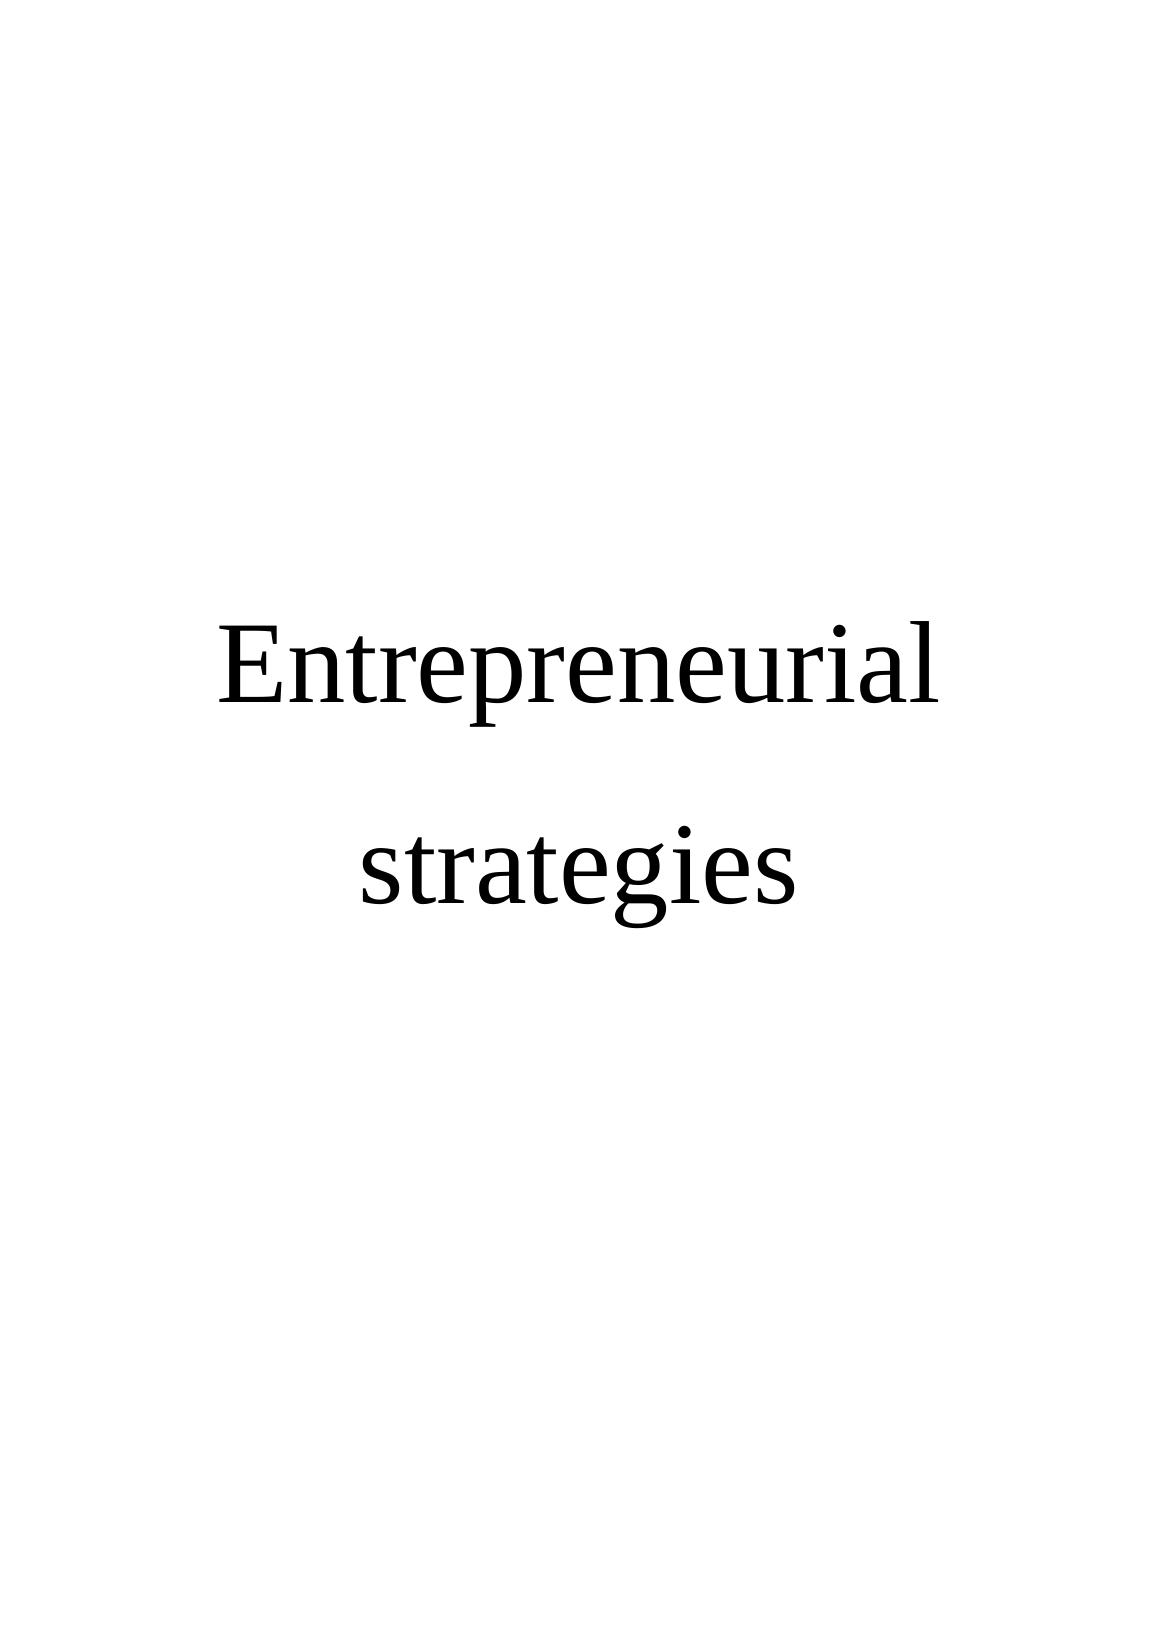 Entrepreneurial strategies - Assignment_1